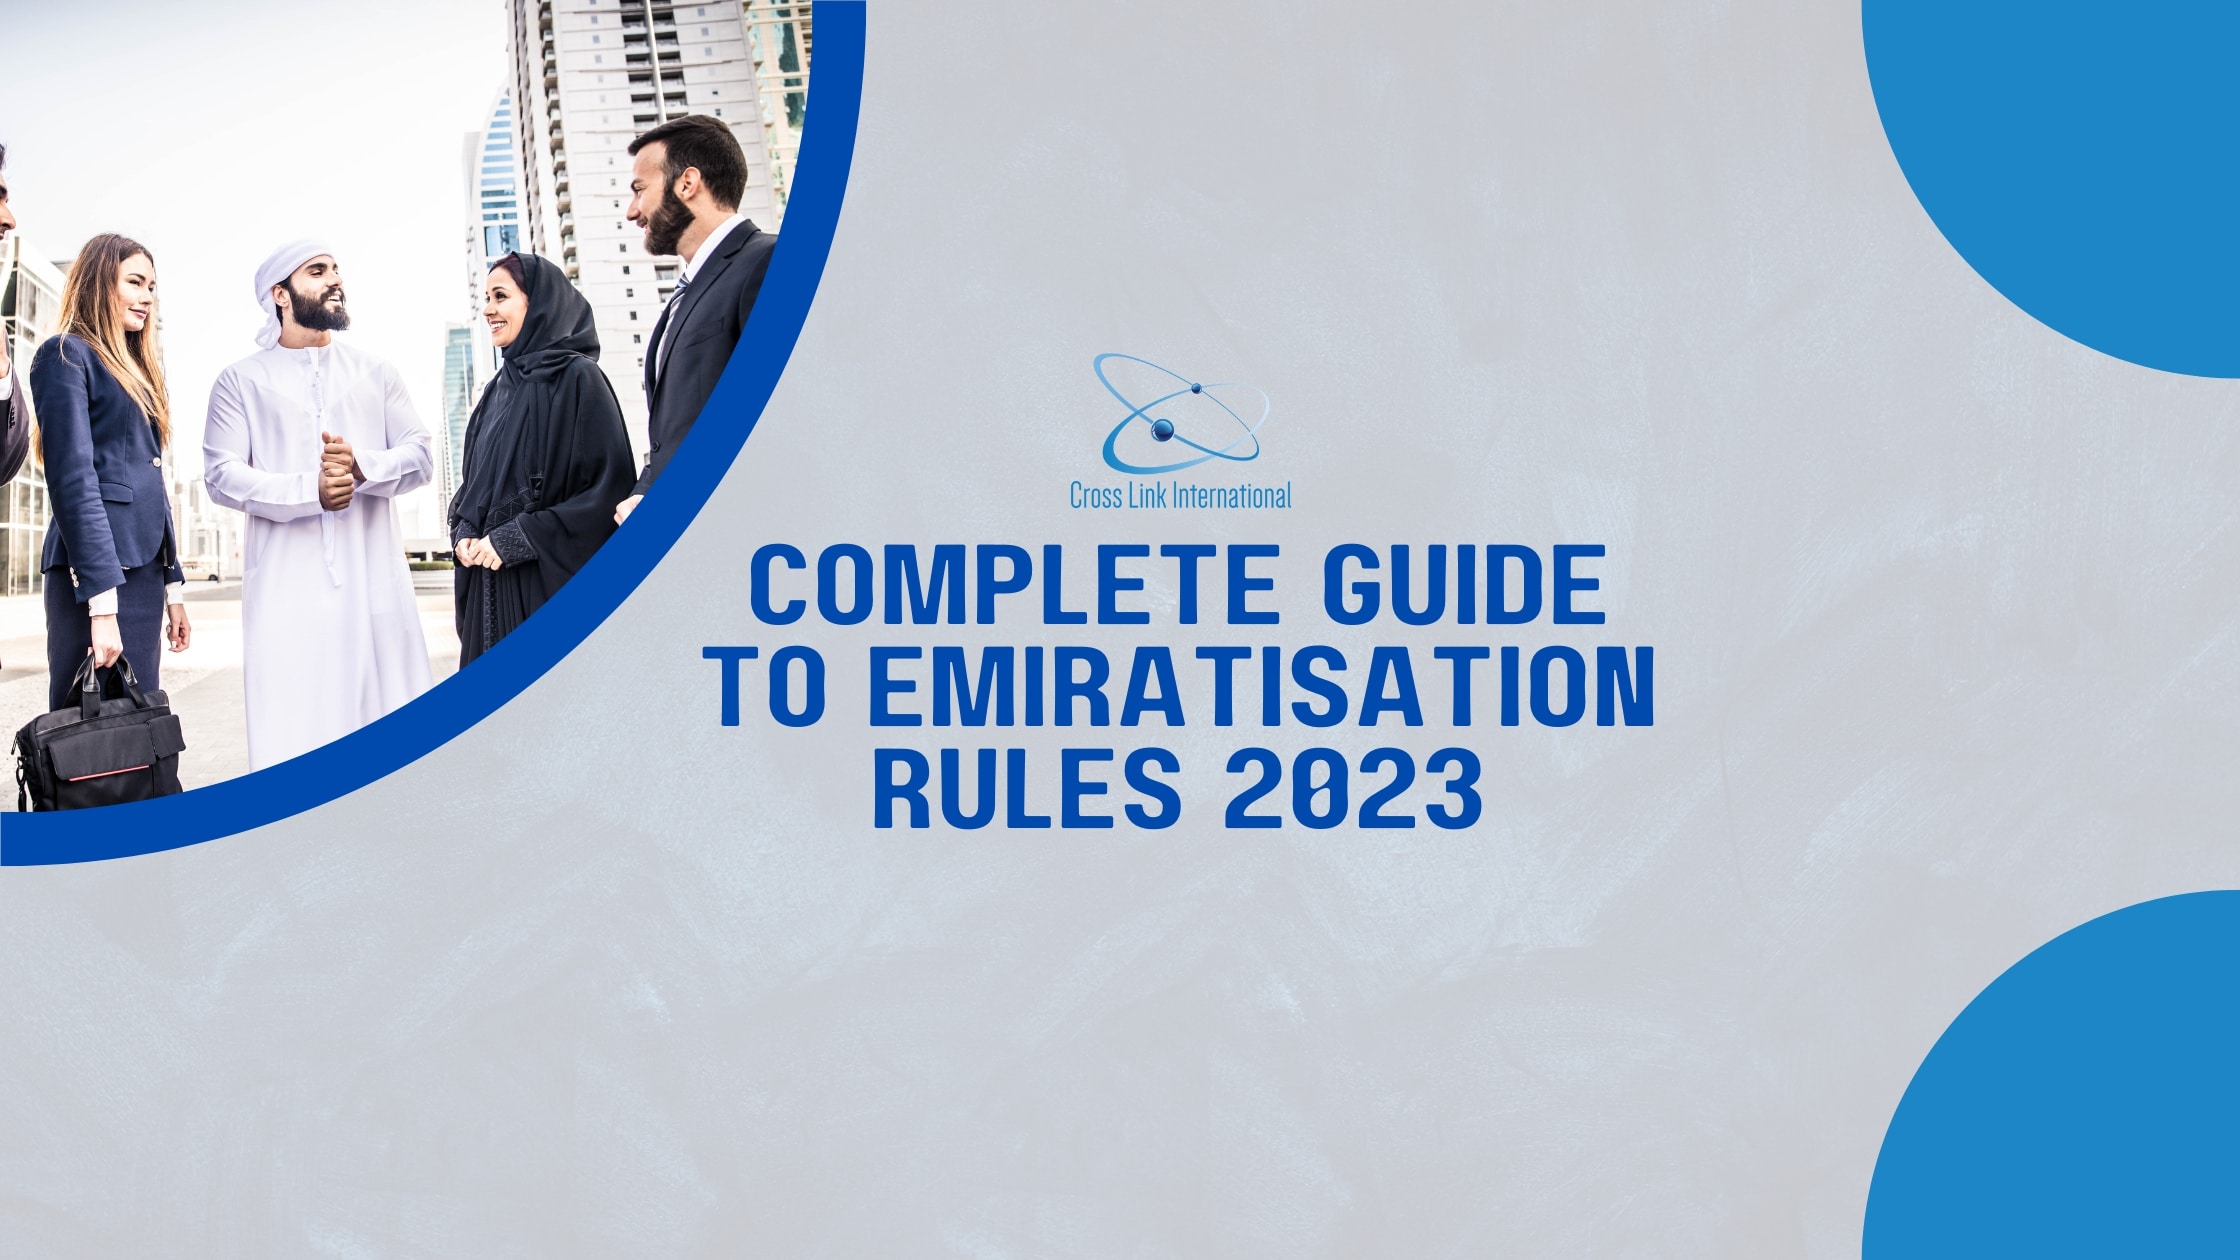 Emiratisation rules